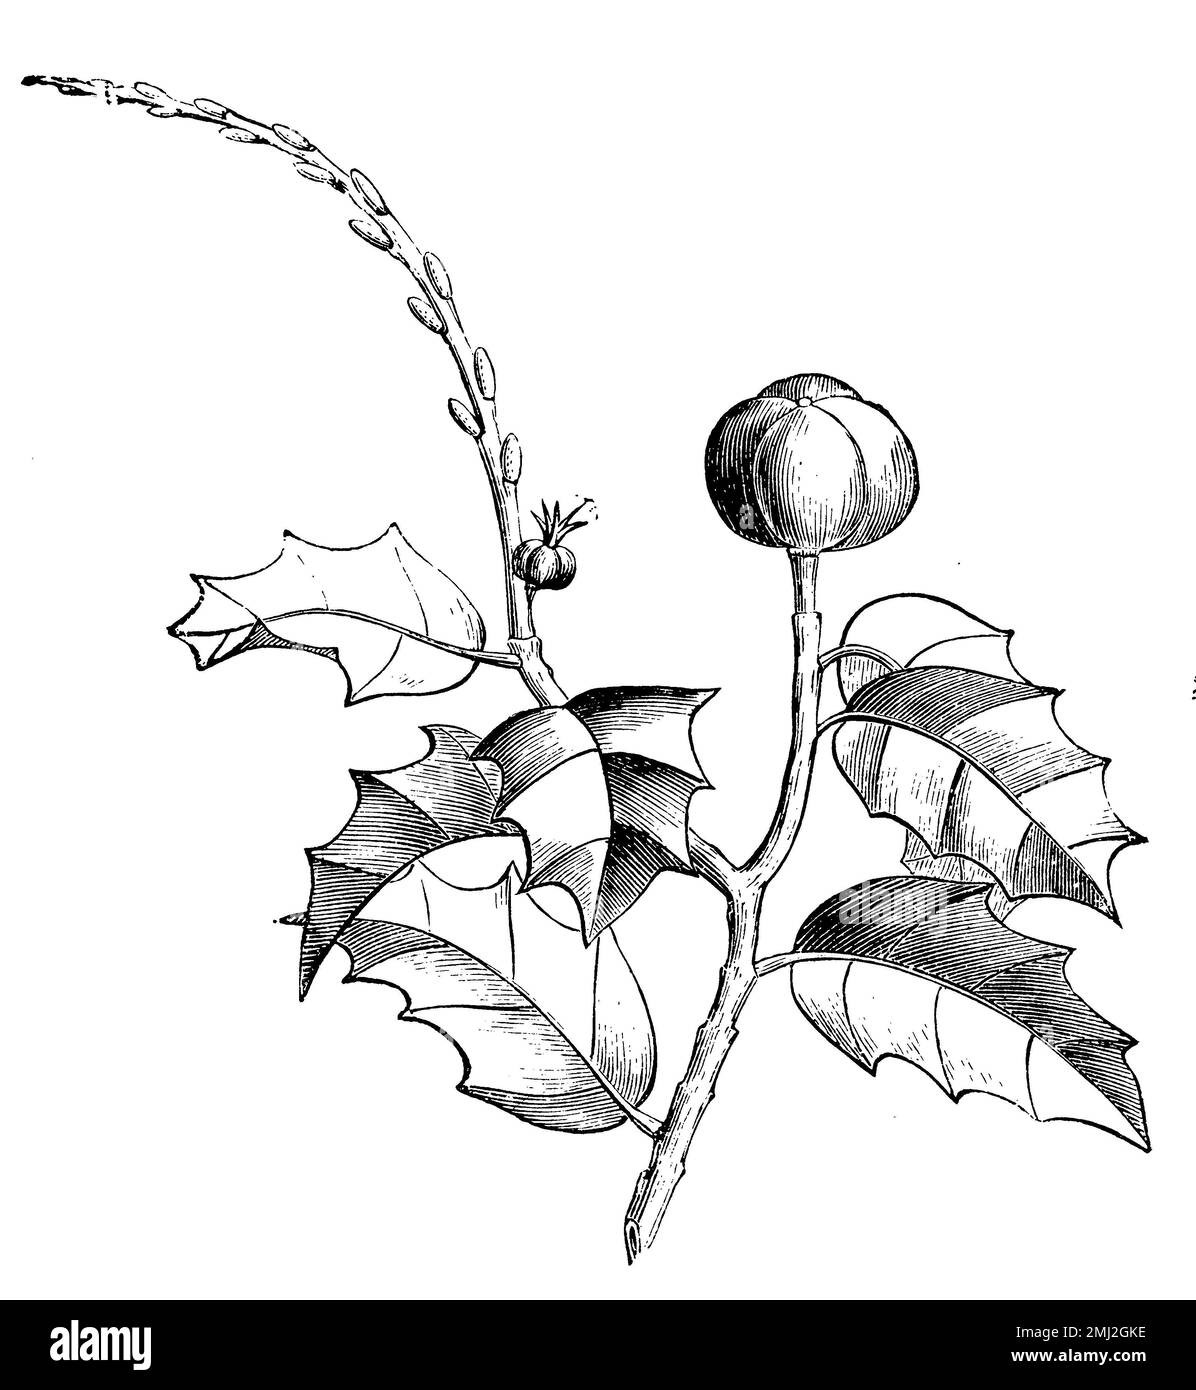 manchineel, Hippomane mancinella,  (encyclopedia, 1890), Manchinelbaum, mancenillier Stock Photo